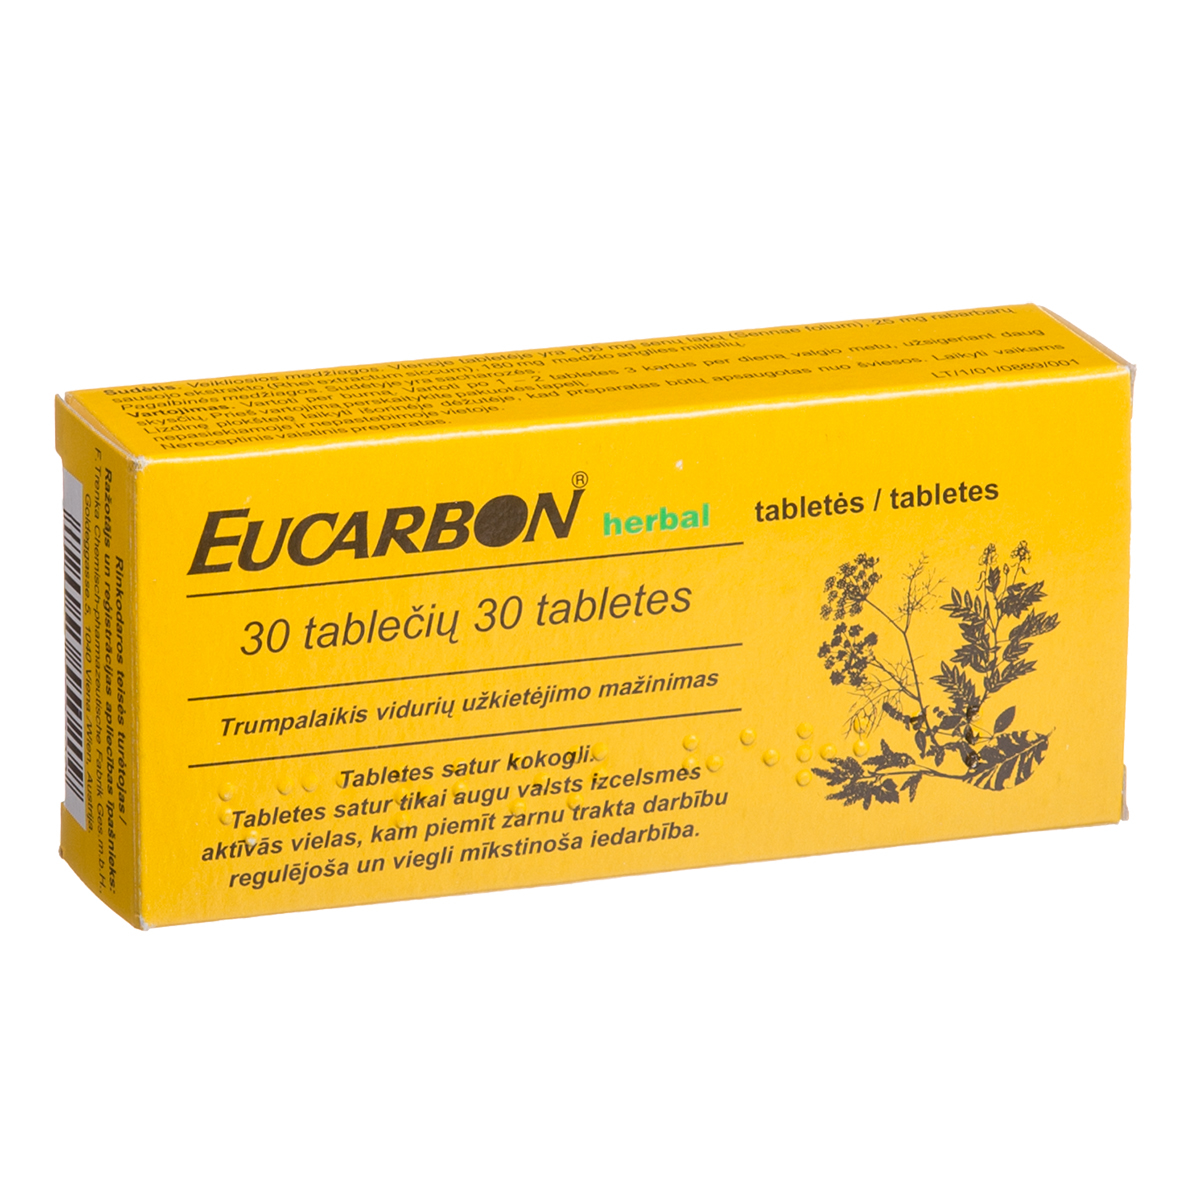 EUCARBON HERBAL, tabletės, N30